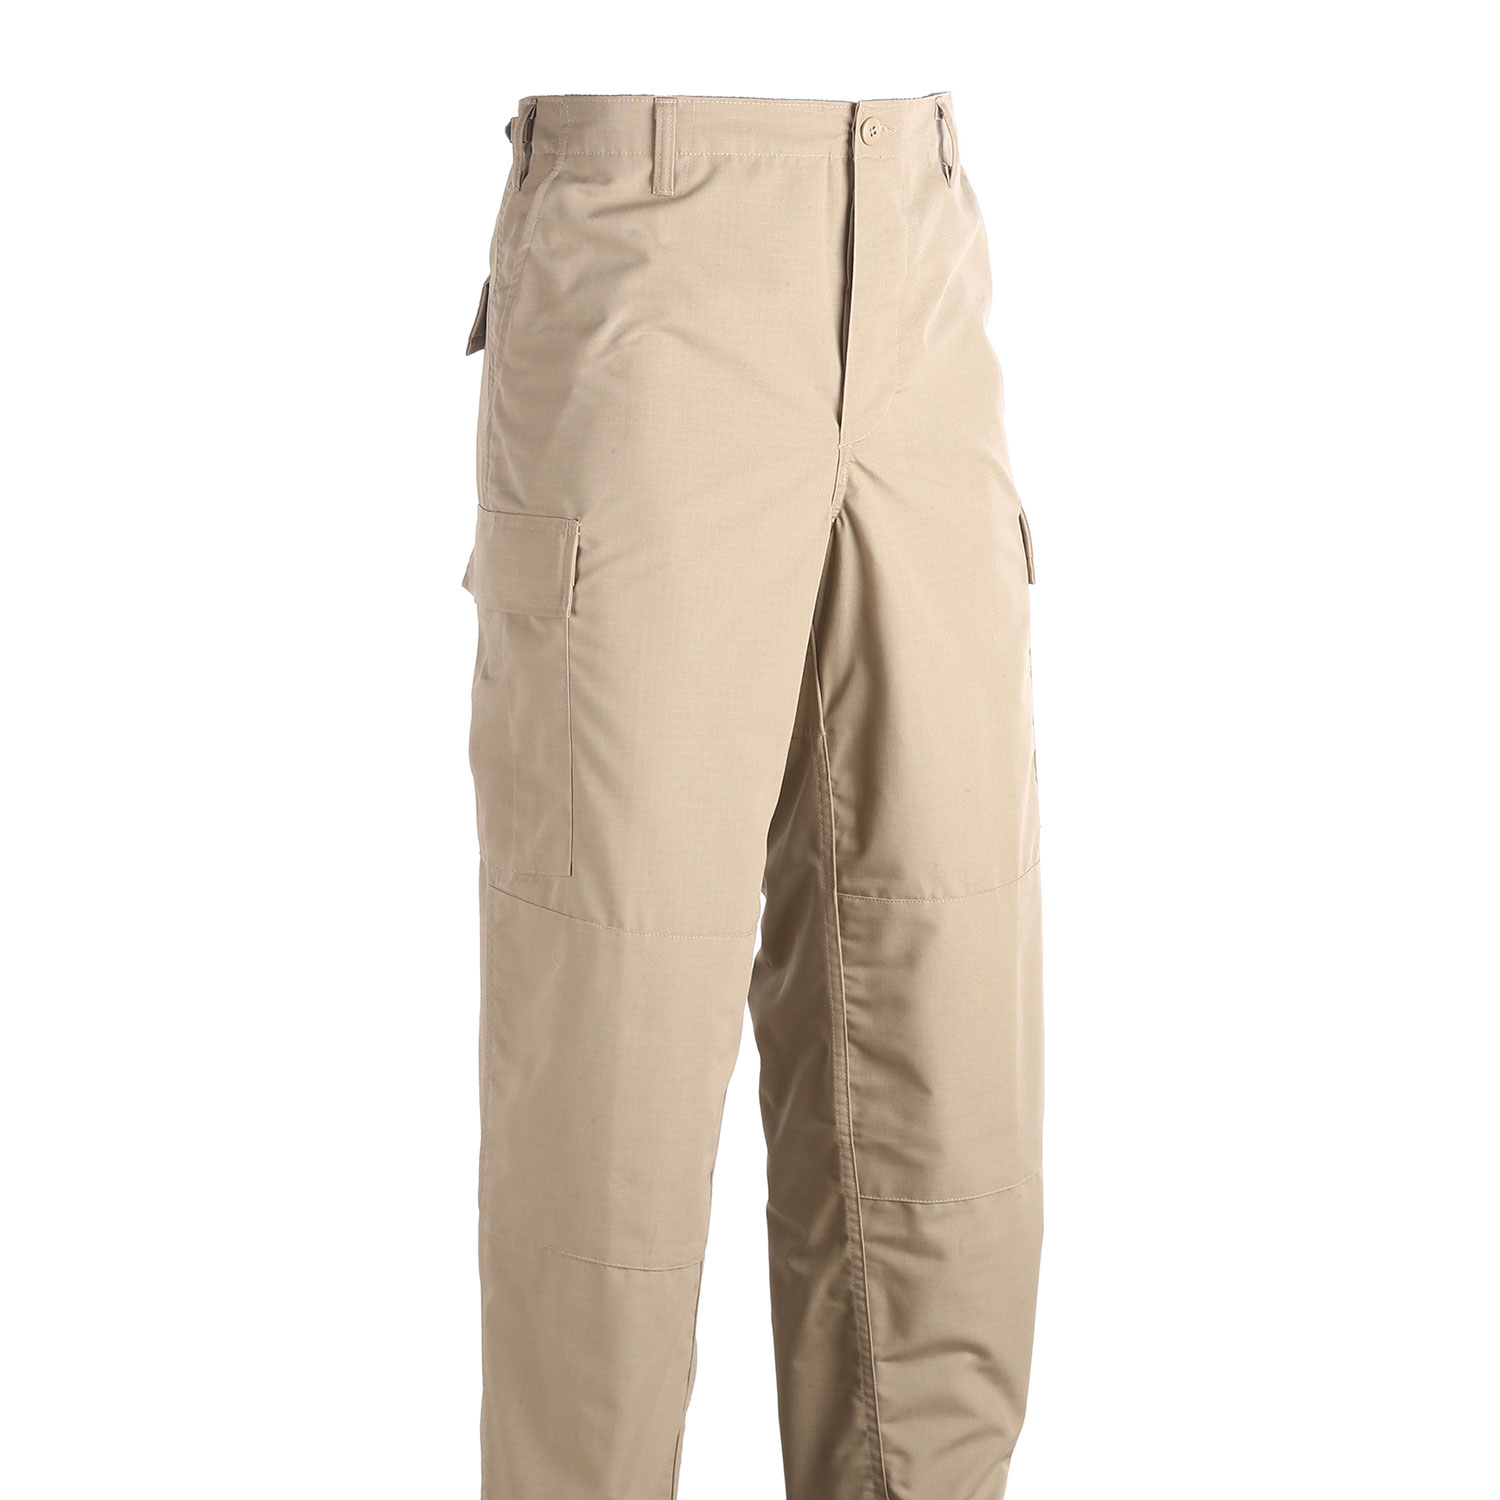 Galls 6 Pocket Poly Cotton Ripstop BDU Pants